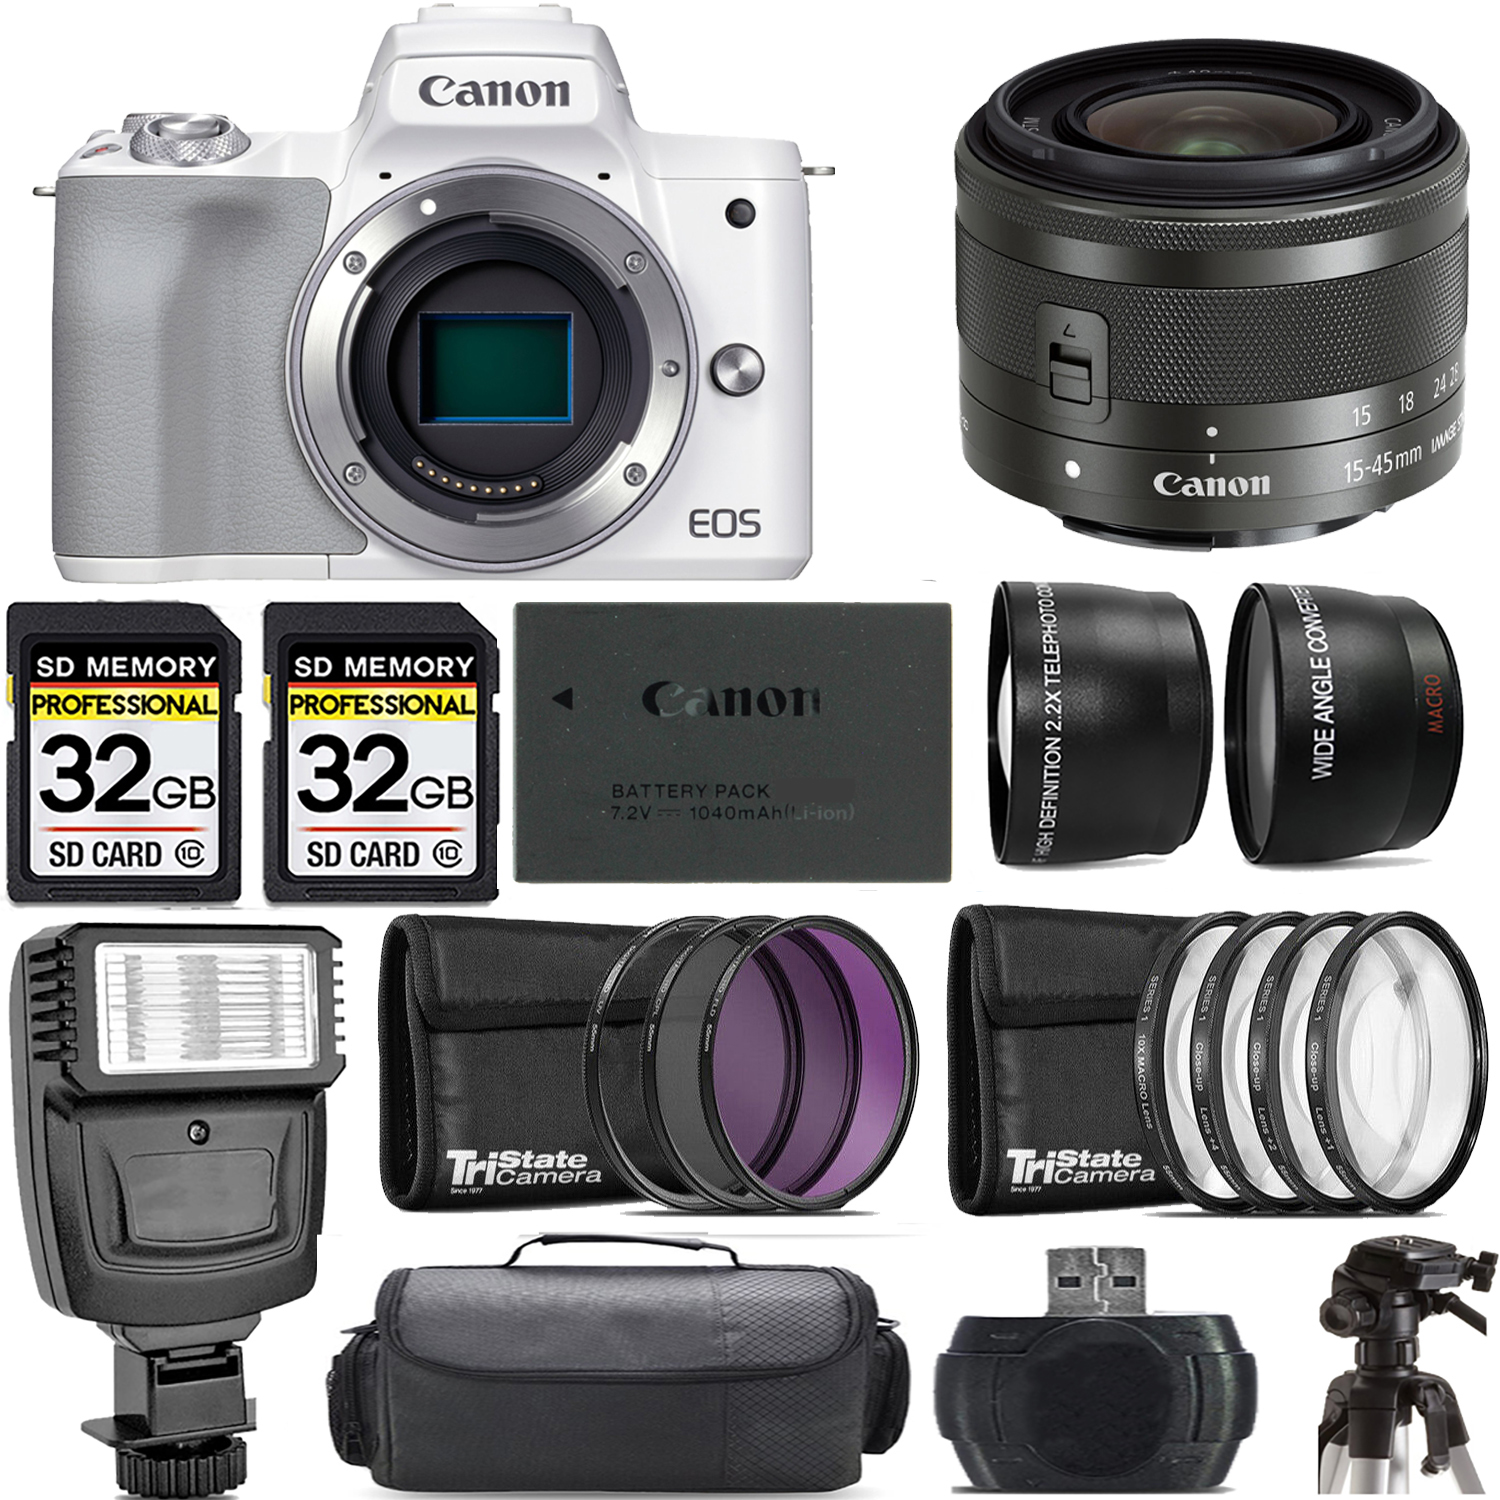 EOS M50 Mark II Camera (White) + 15-45mm IS STM Lens (Graphite) + Flash - Kit *FREE SHIPPING*